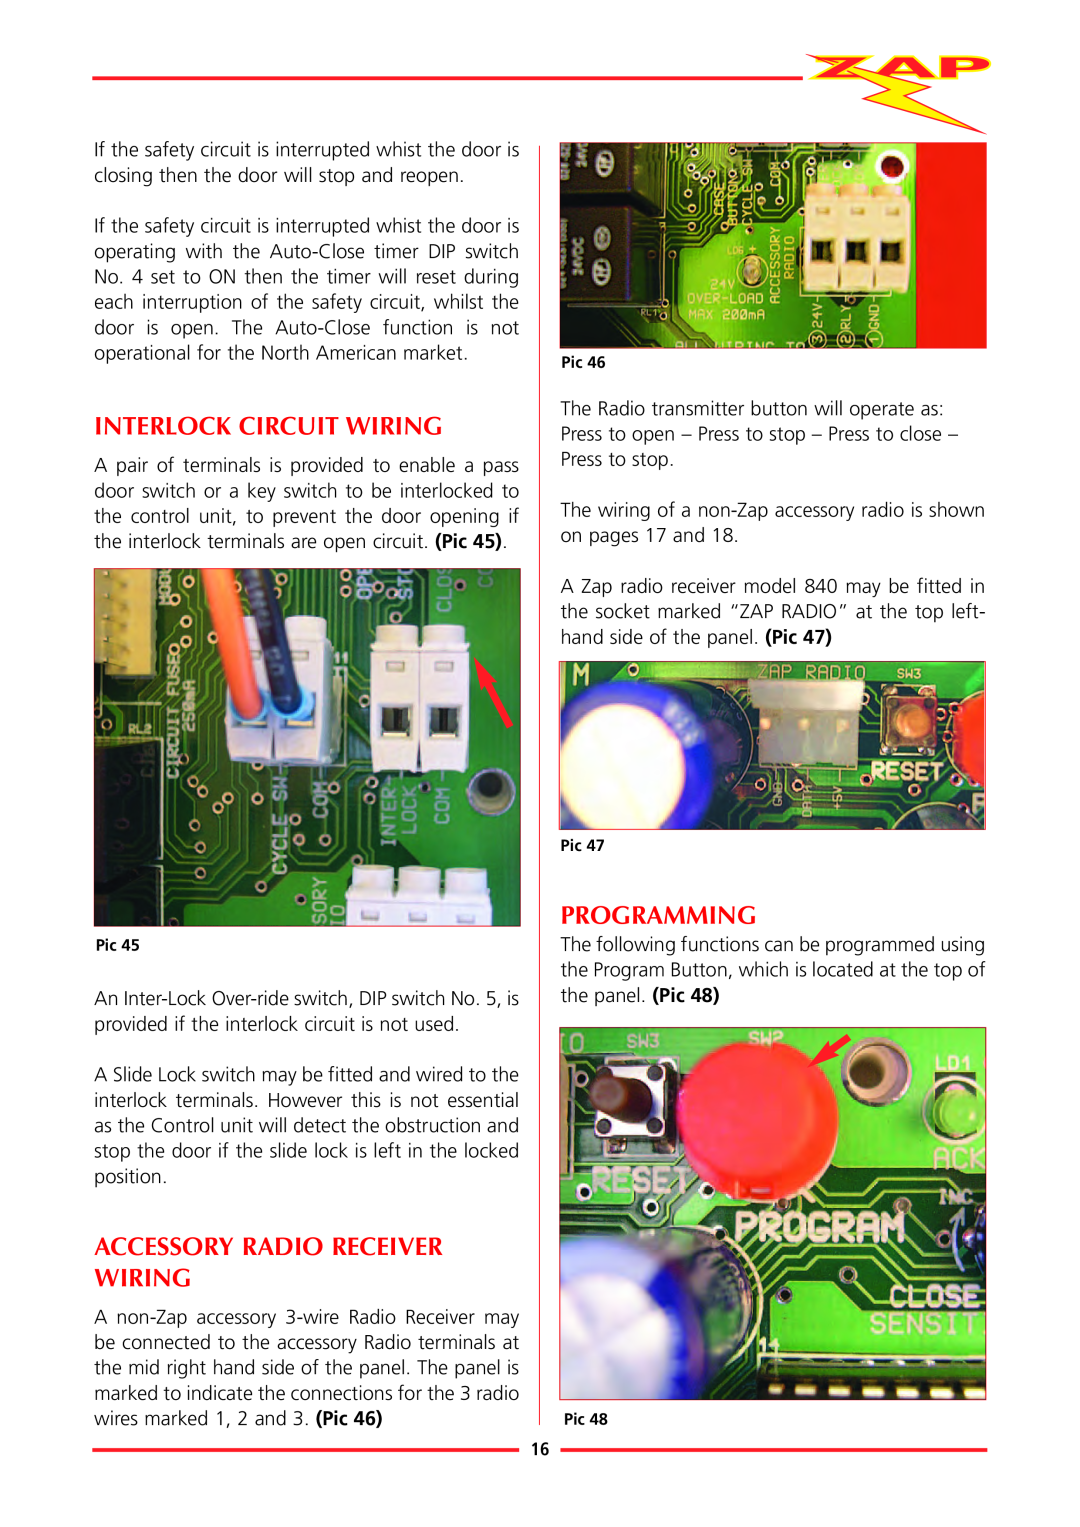 Zap 815-RL installation instructions Interlock Circuit Wiring, Accessory Radio Receiver Wiring, Programming 